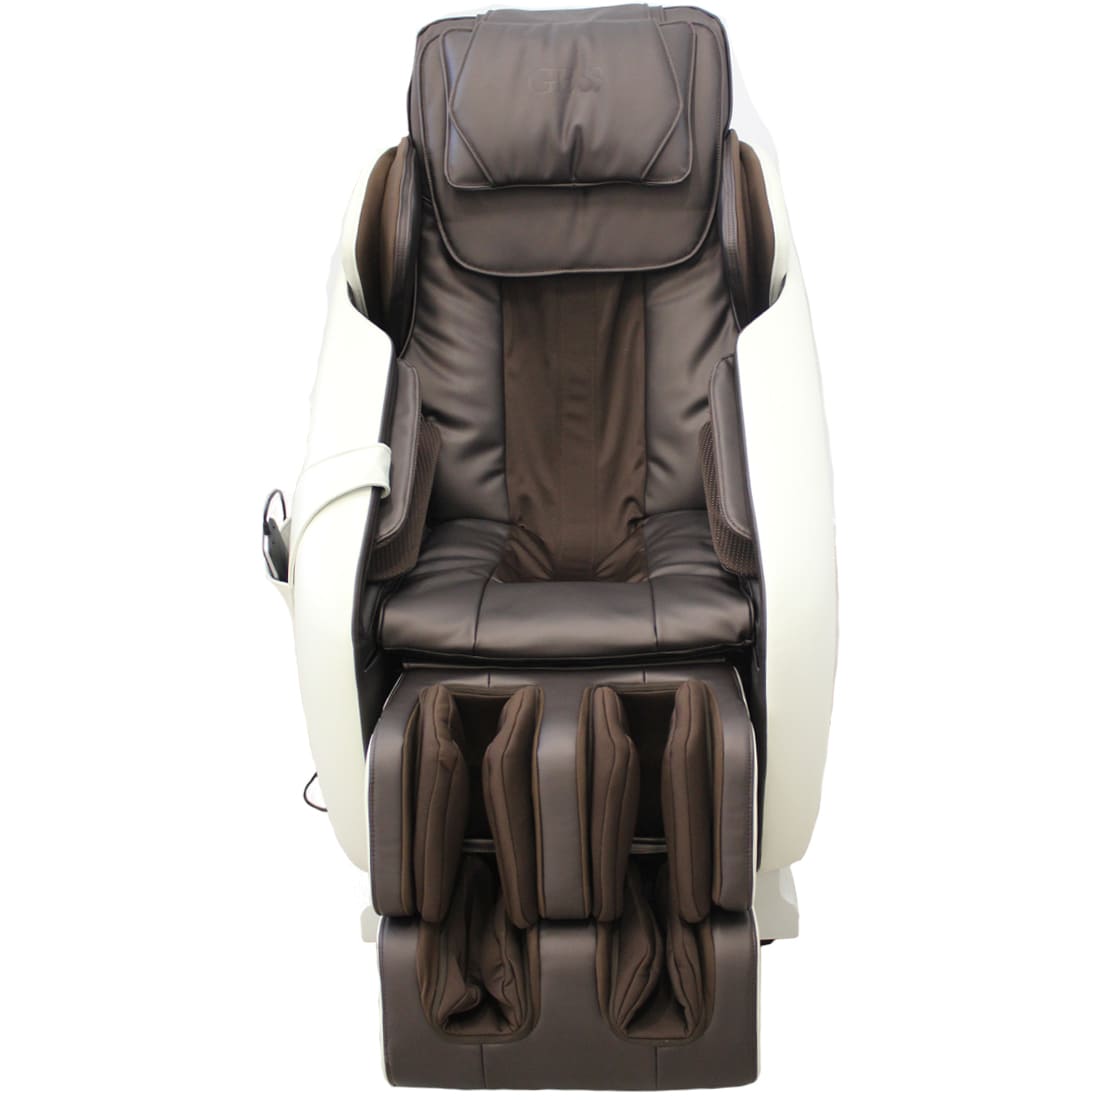 Массажное кресло Gess Imperial Beige brown 789